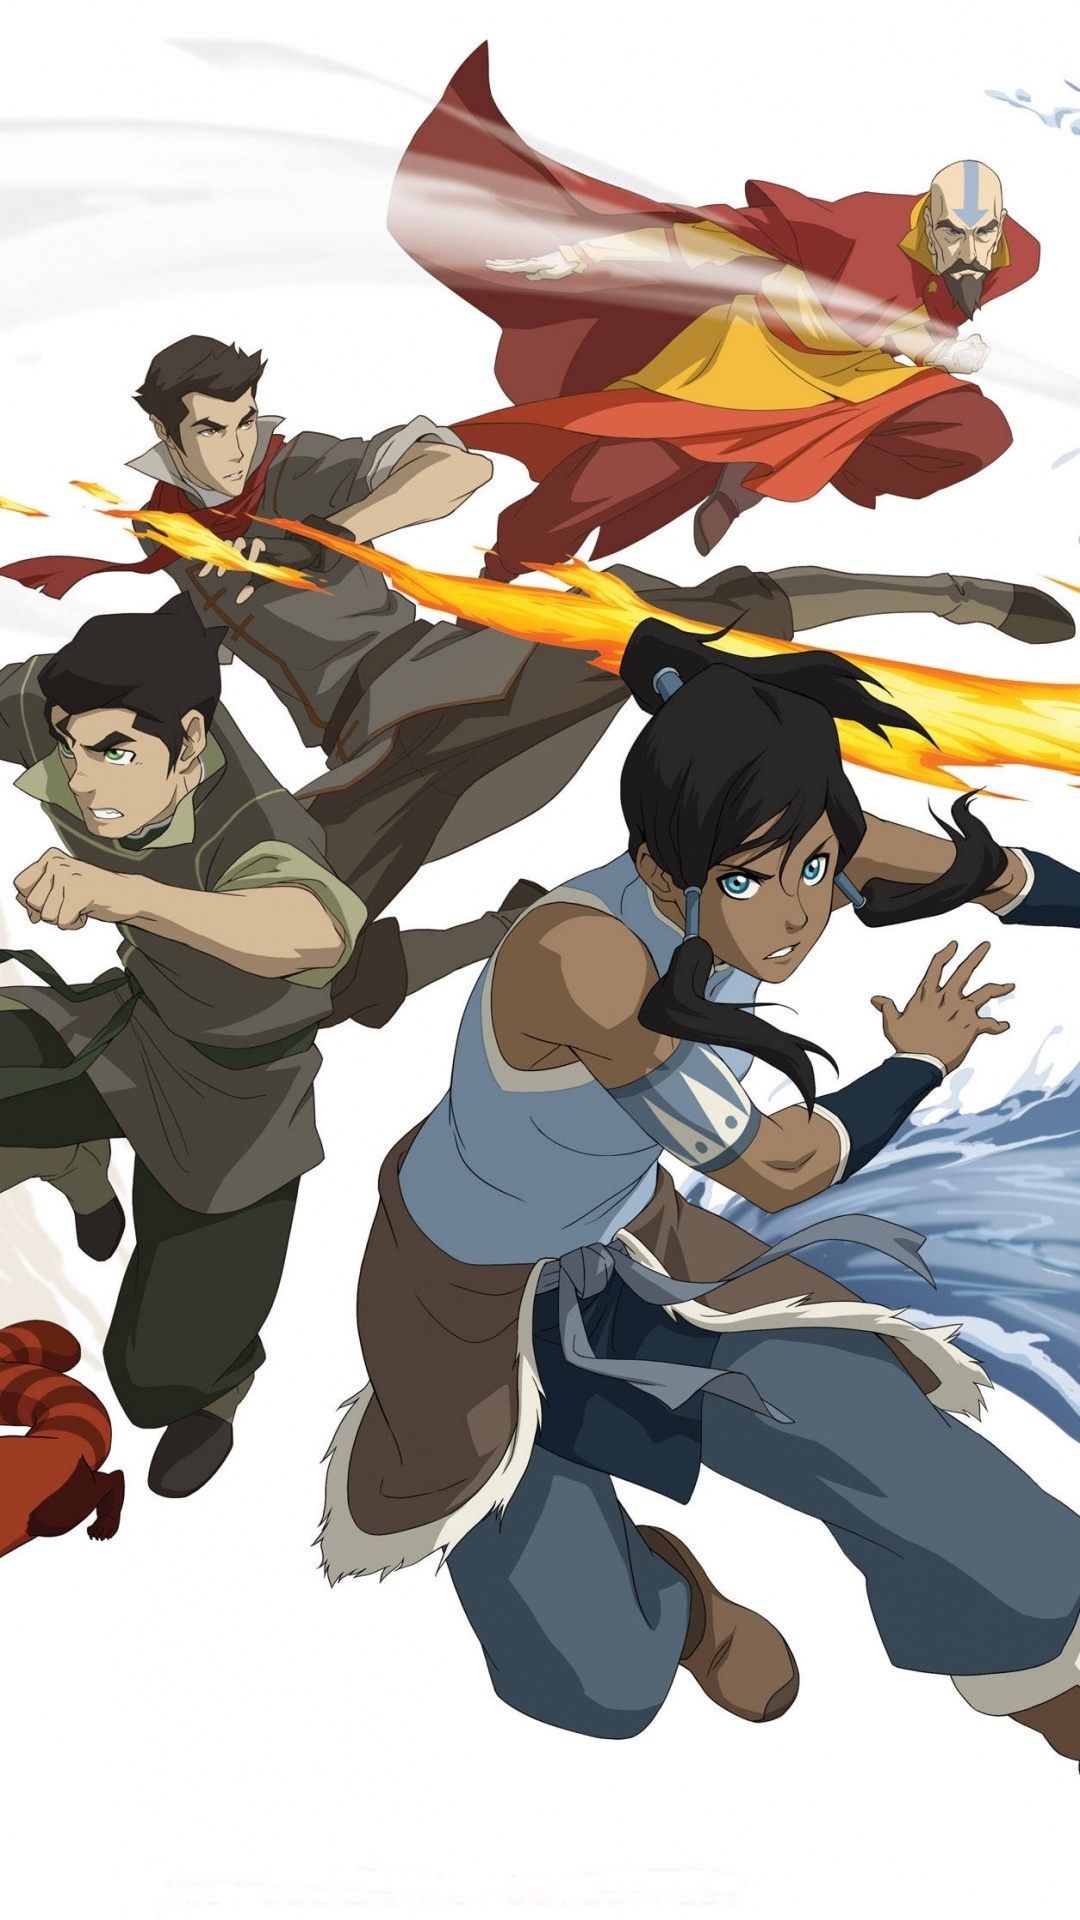 Anime Avatar, Korra's journey, Dynamic storytelling, Elemental powers, 1080x1920 Full HD Handy